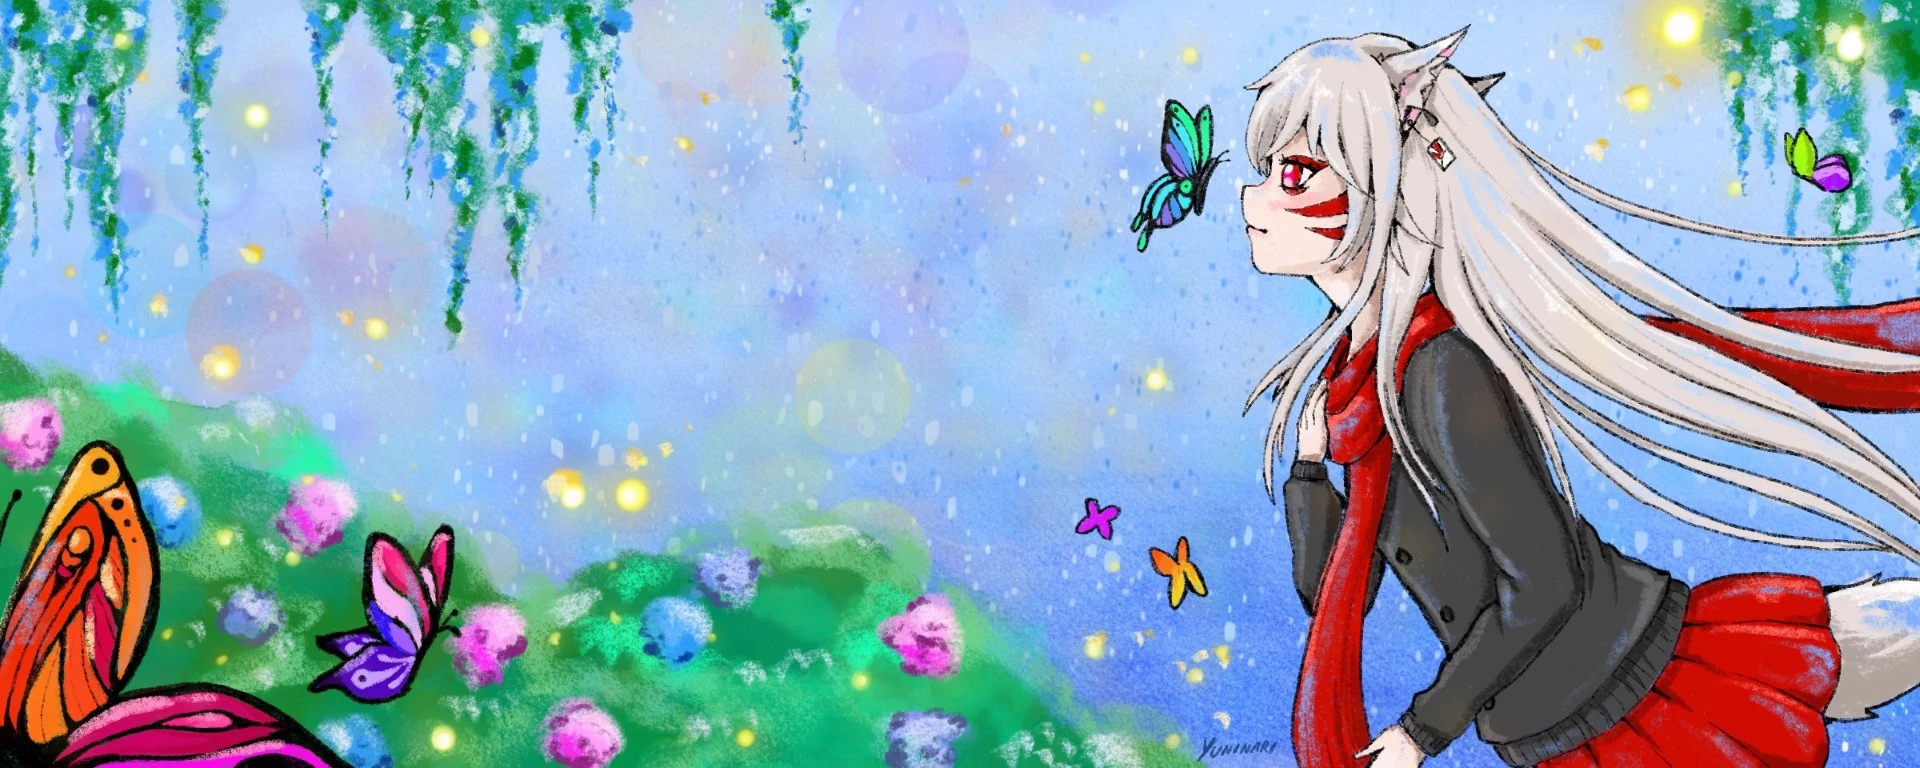 illustration banner foxgirl hydrangea garden with butterflies